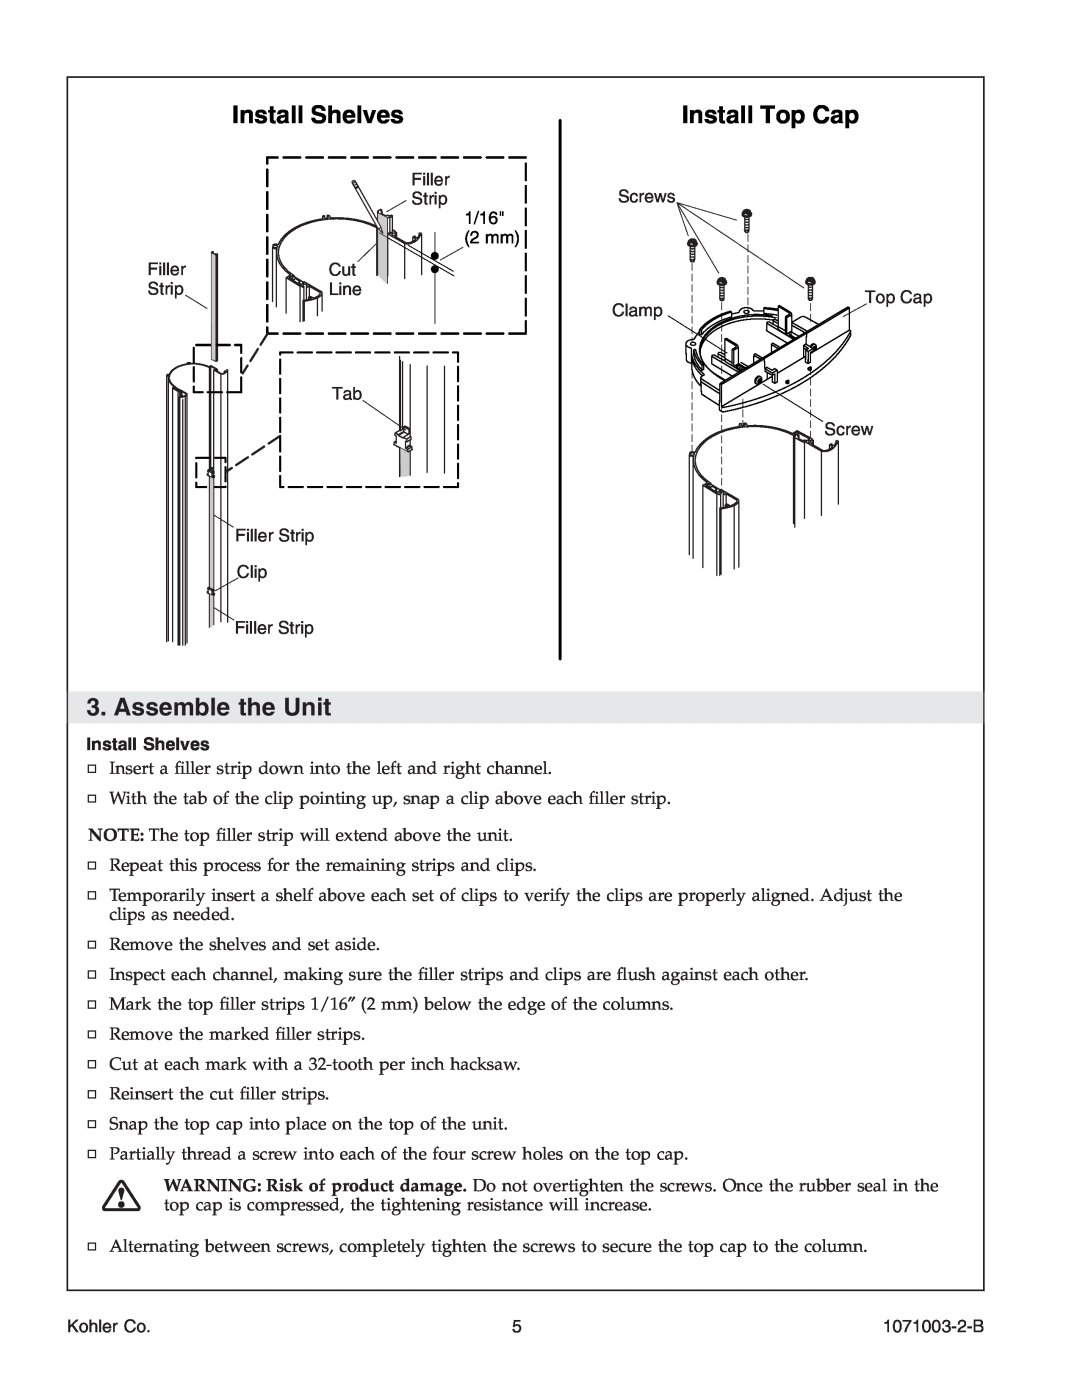 Kohler 1071003-2-B, K-1840 manual Install Shelves, Install Top Cap, Assemble the Unit 